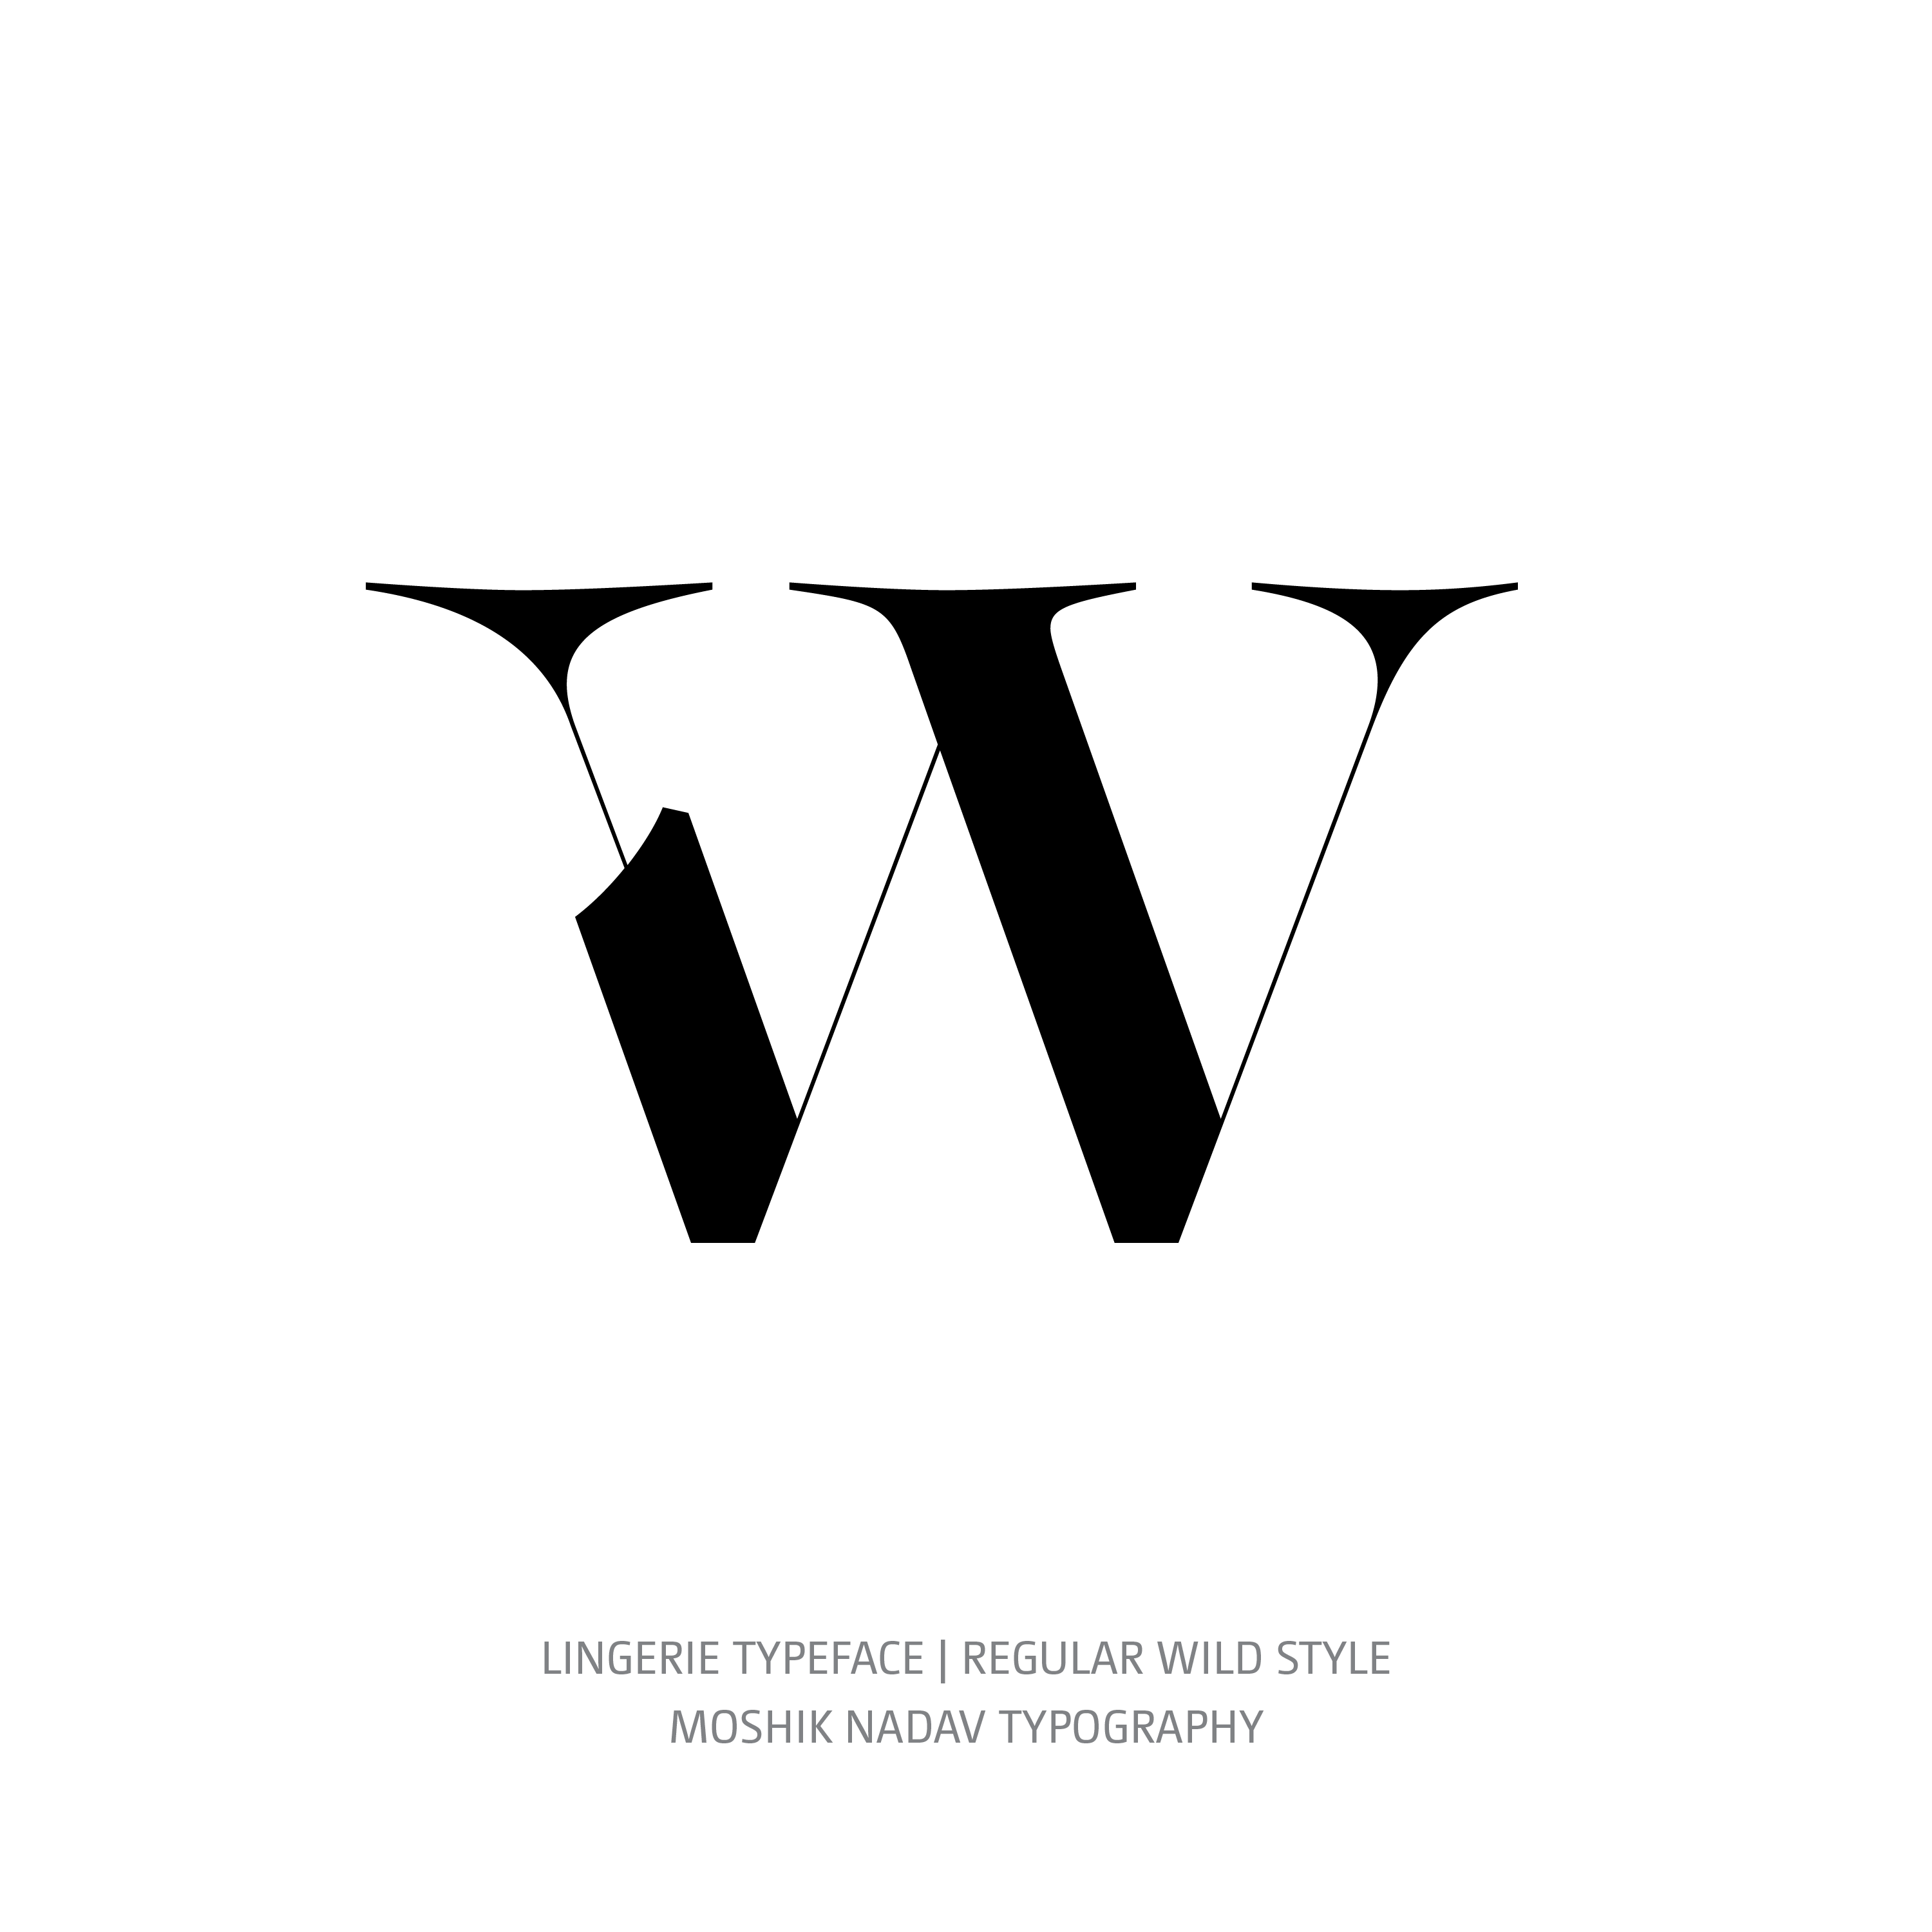 Lingerie Typeface Regular Wild w